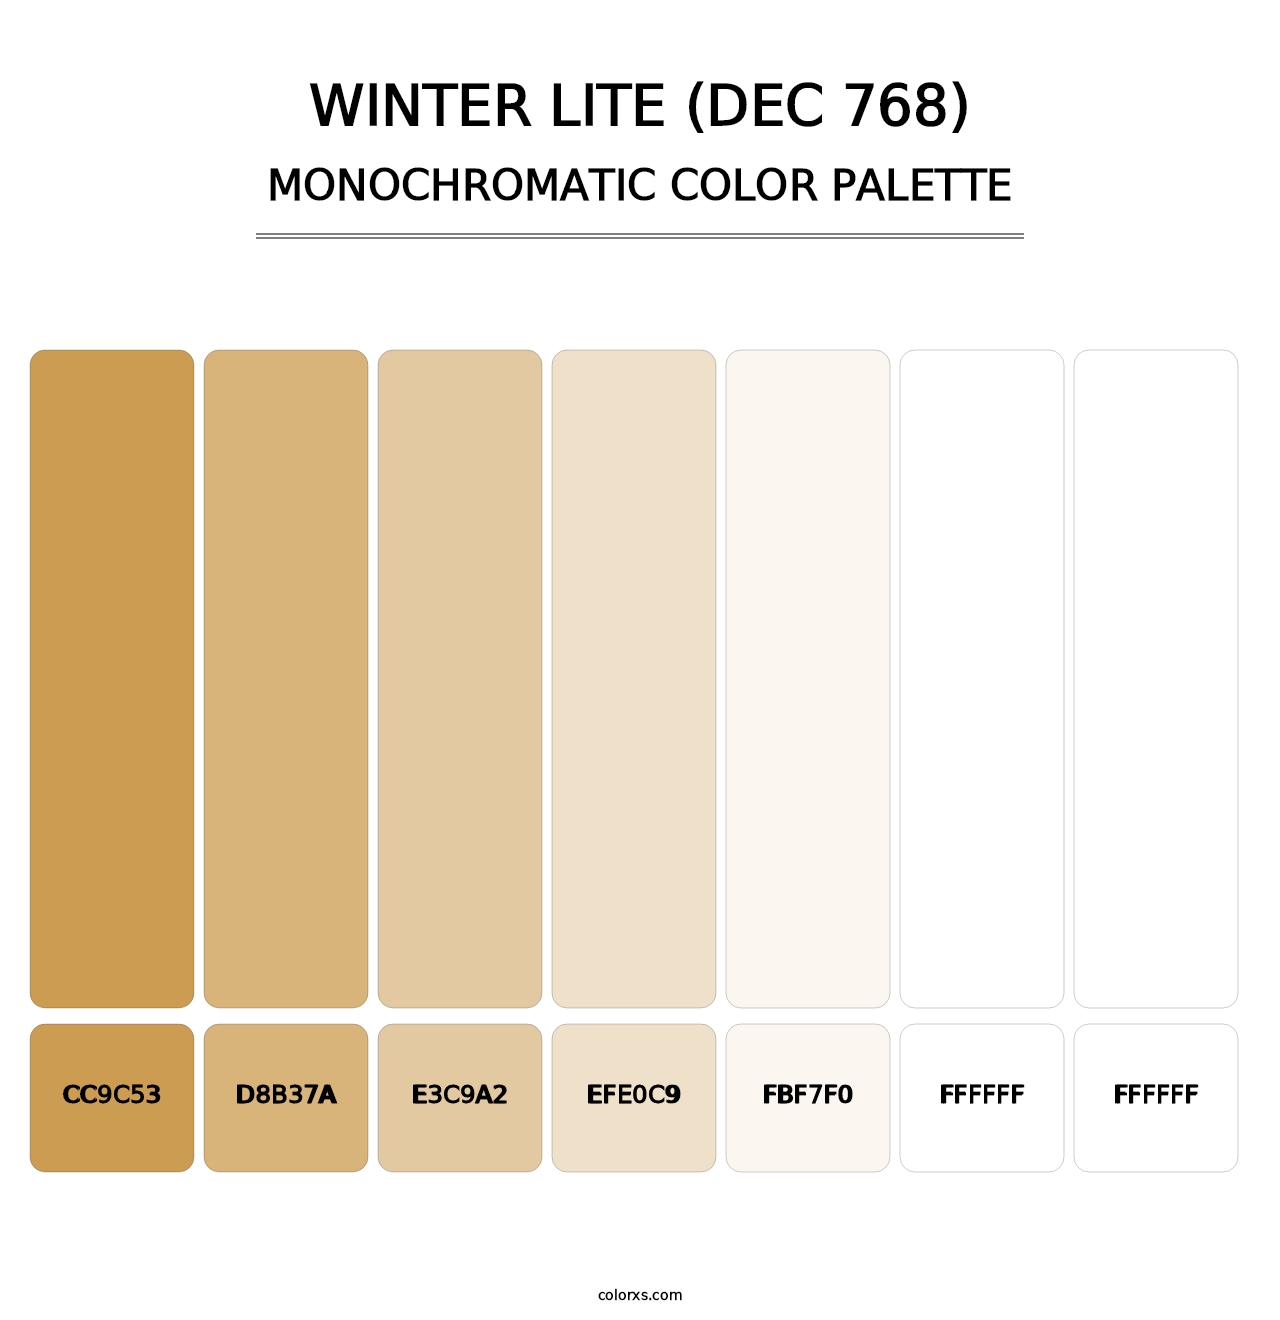 Winter Lite (DEC 768) - Monochromatic Color Palette